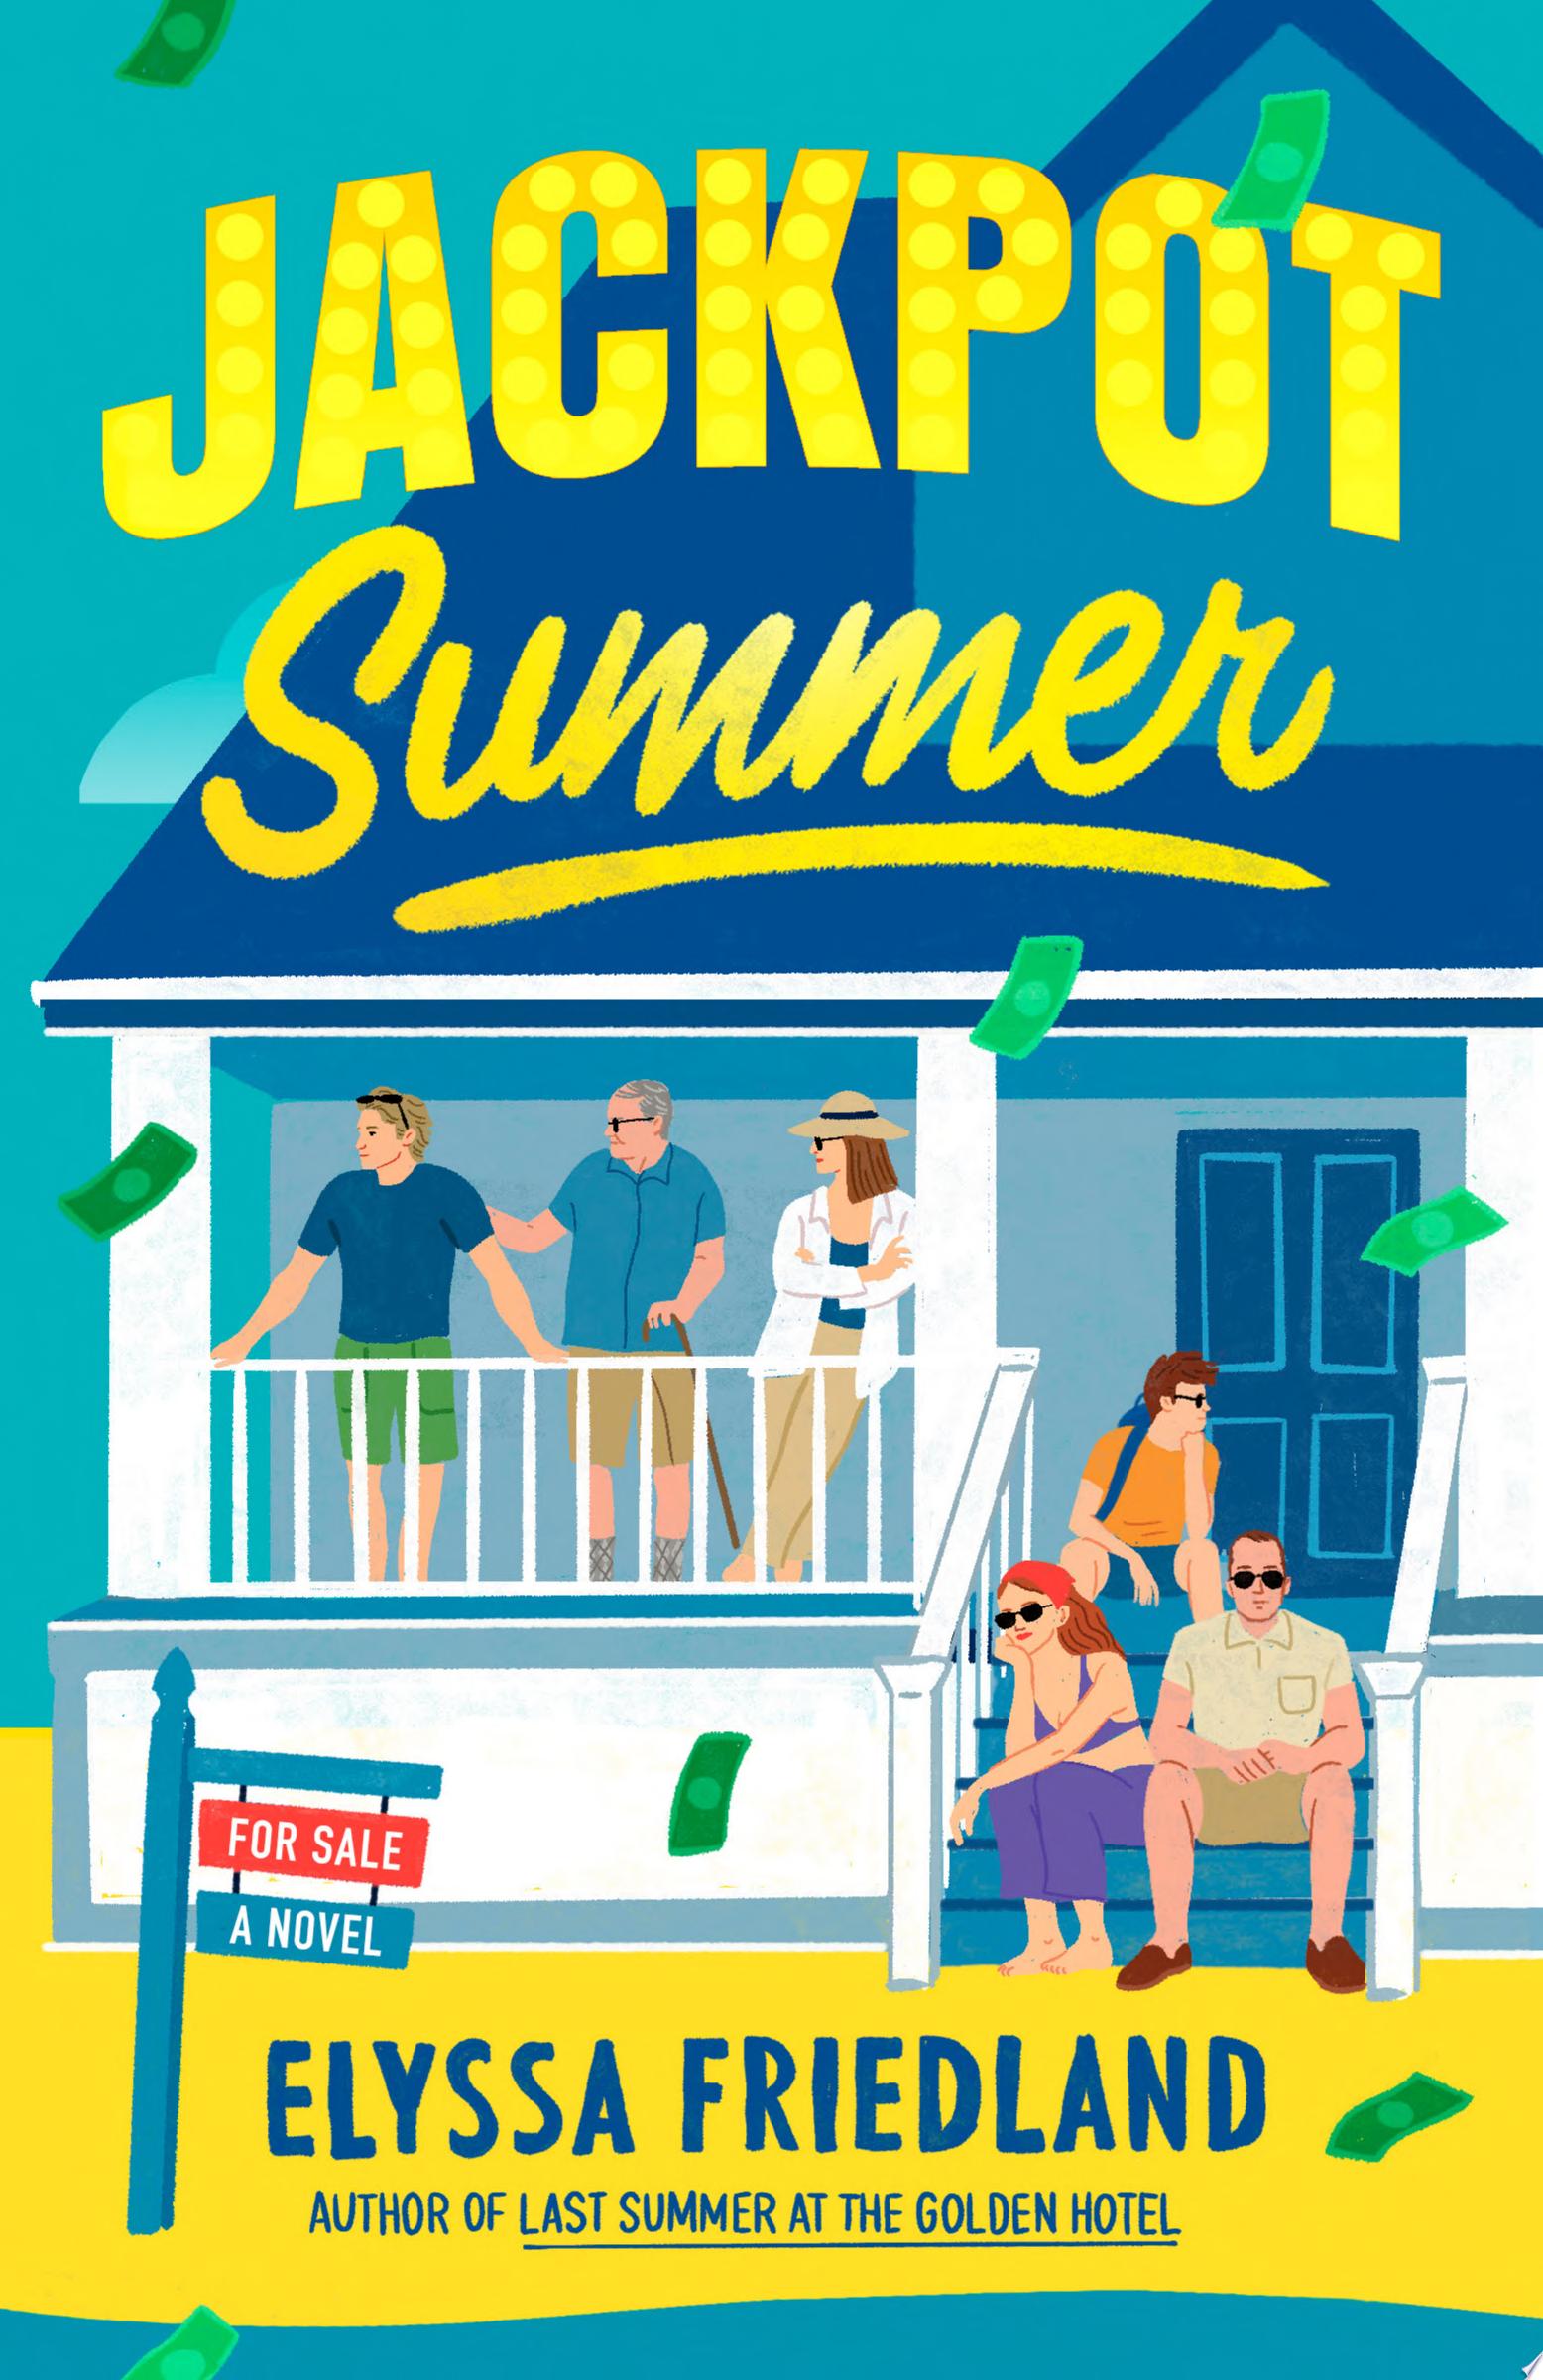 Image for "Jackpot Summer"